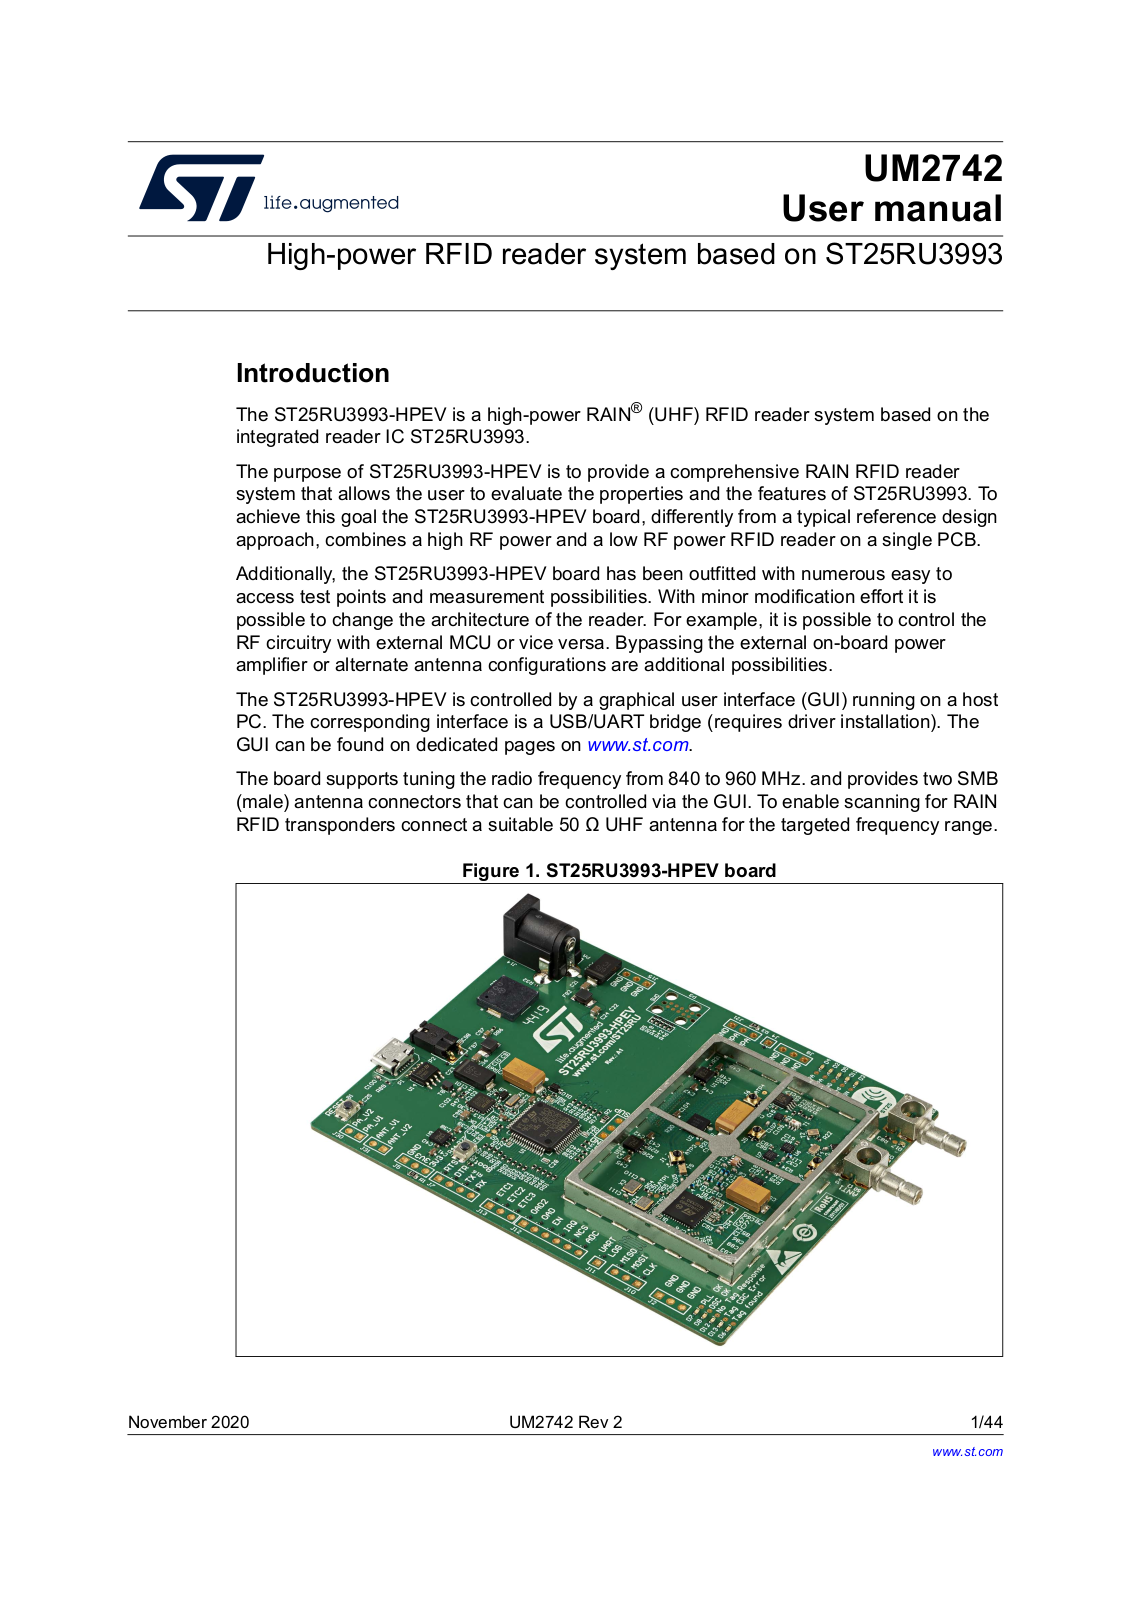 STMicroelectronics ST25RU3993, RFID User Manual